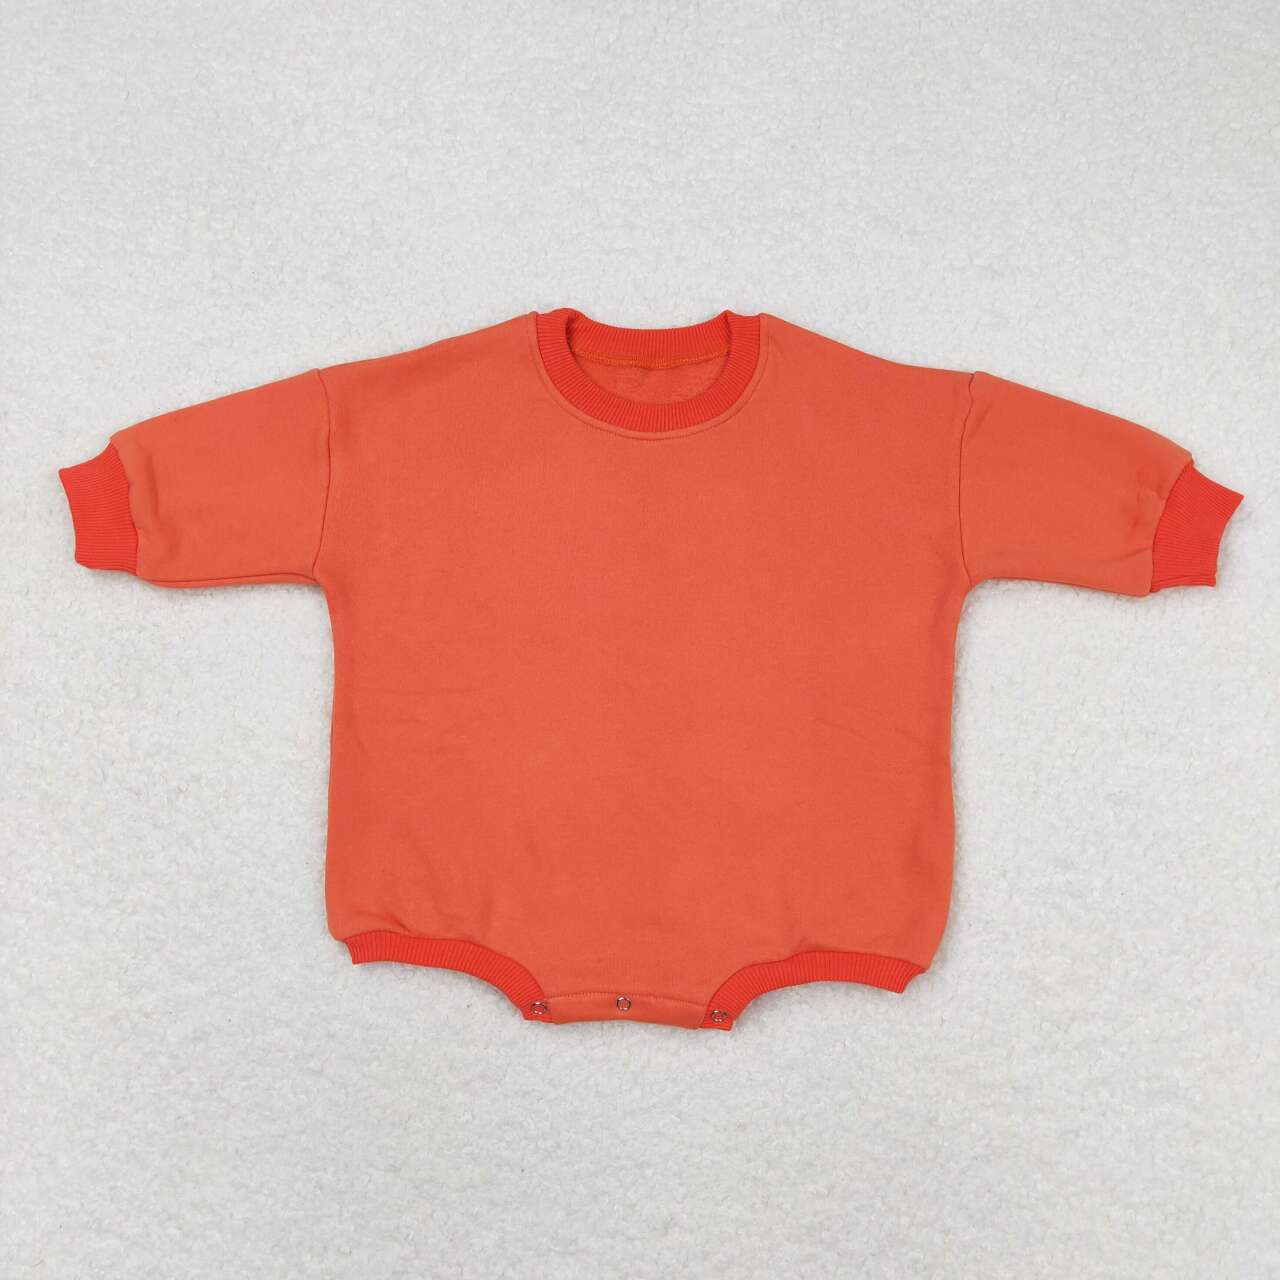 LR0957 Velvet orange red sweatshirt long sleeve jumpsuit